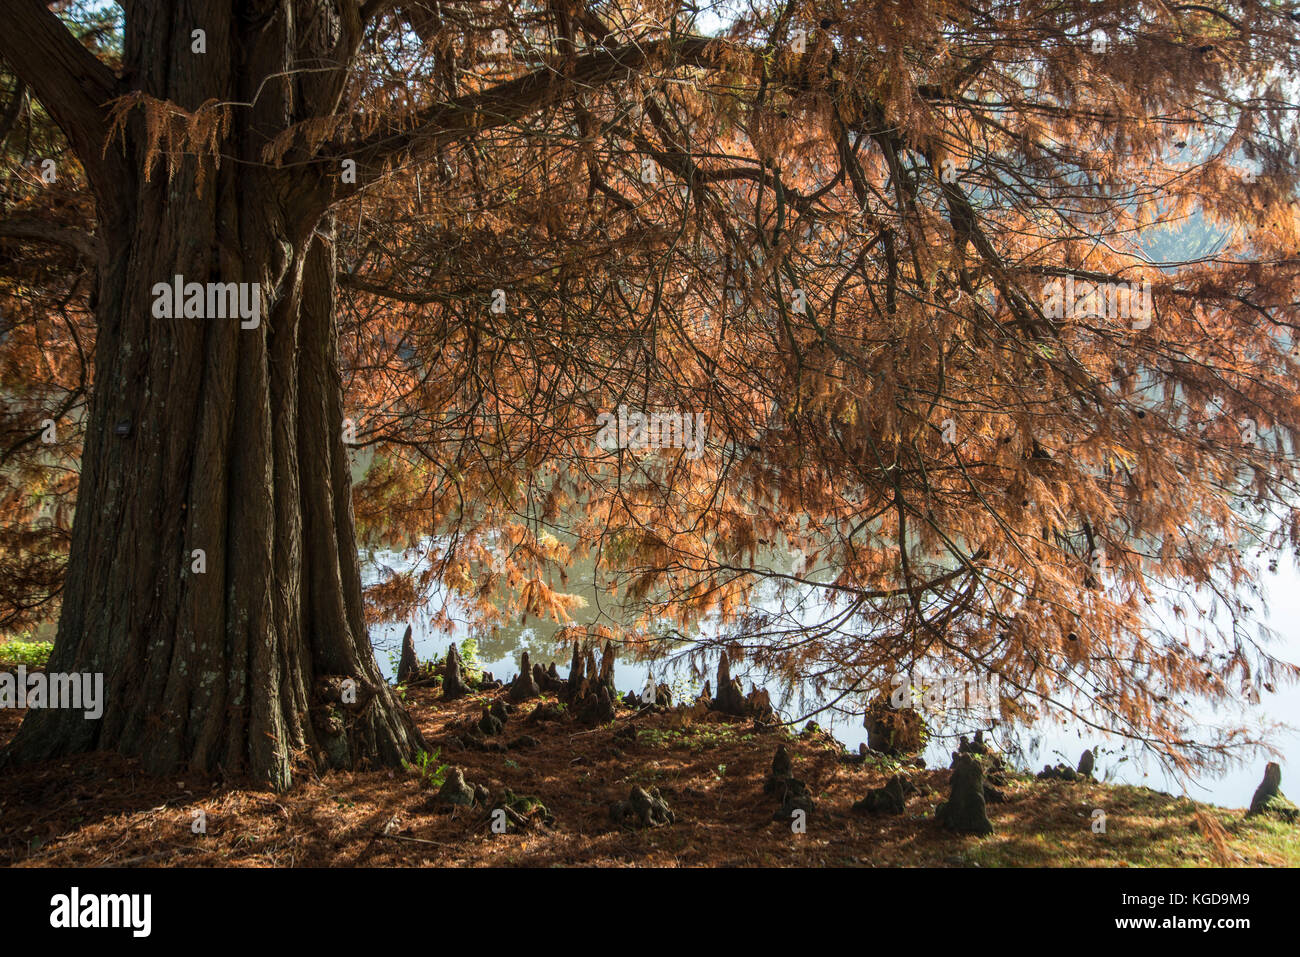 Cypress Swamp: Distichum Taxodium distichum. Herbst. Stockfoto